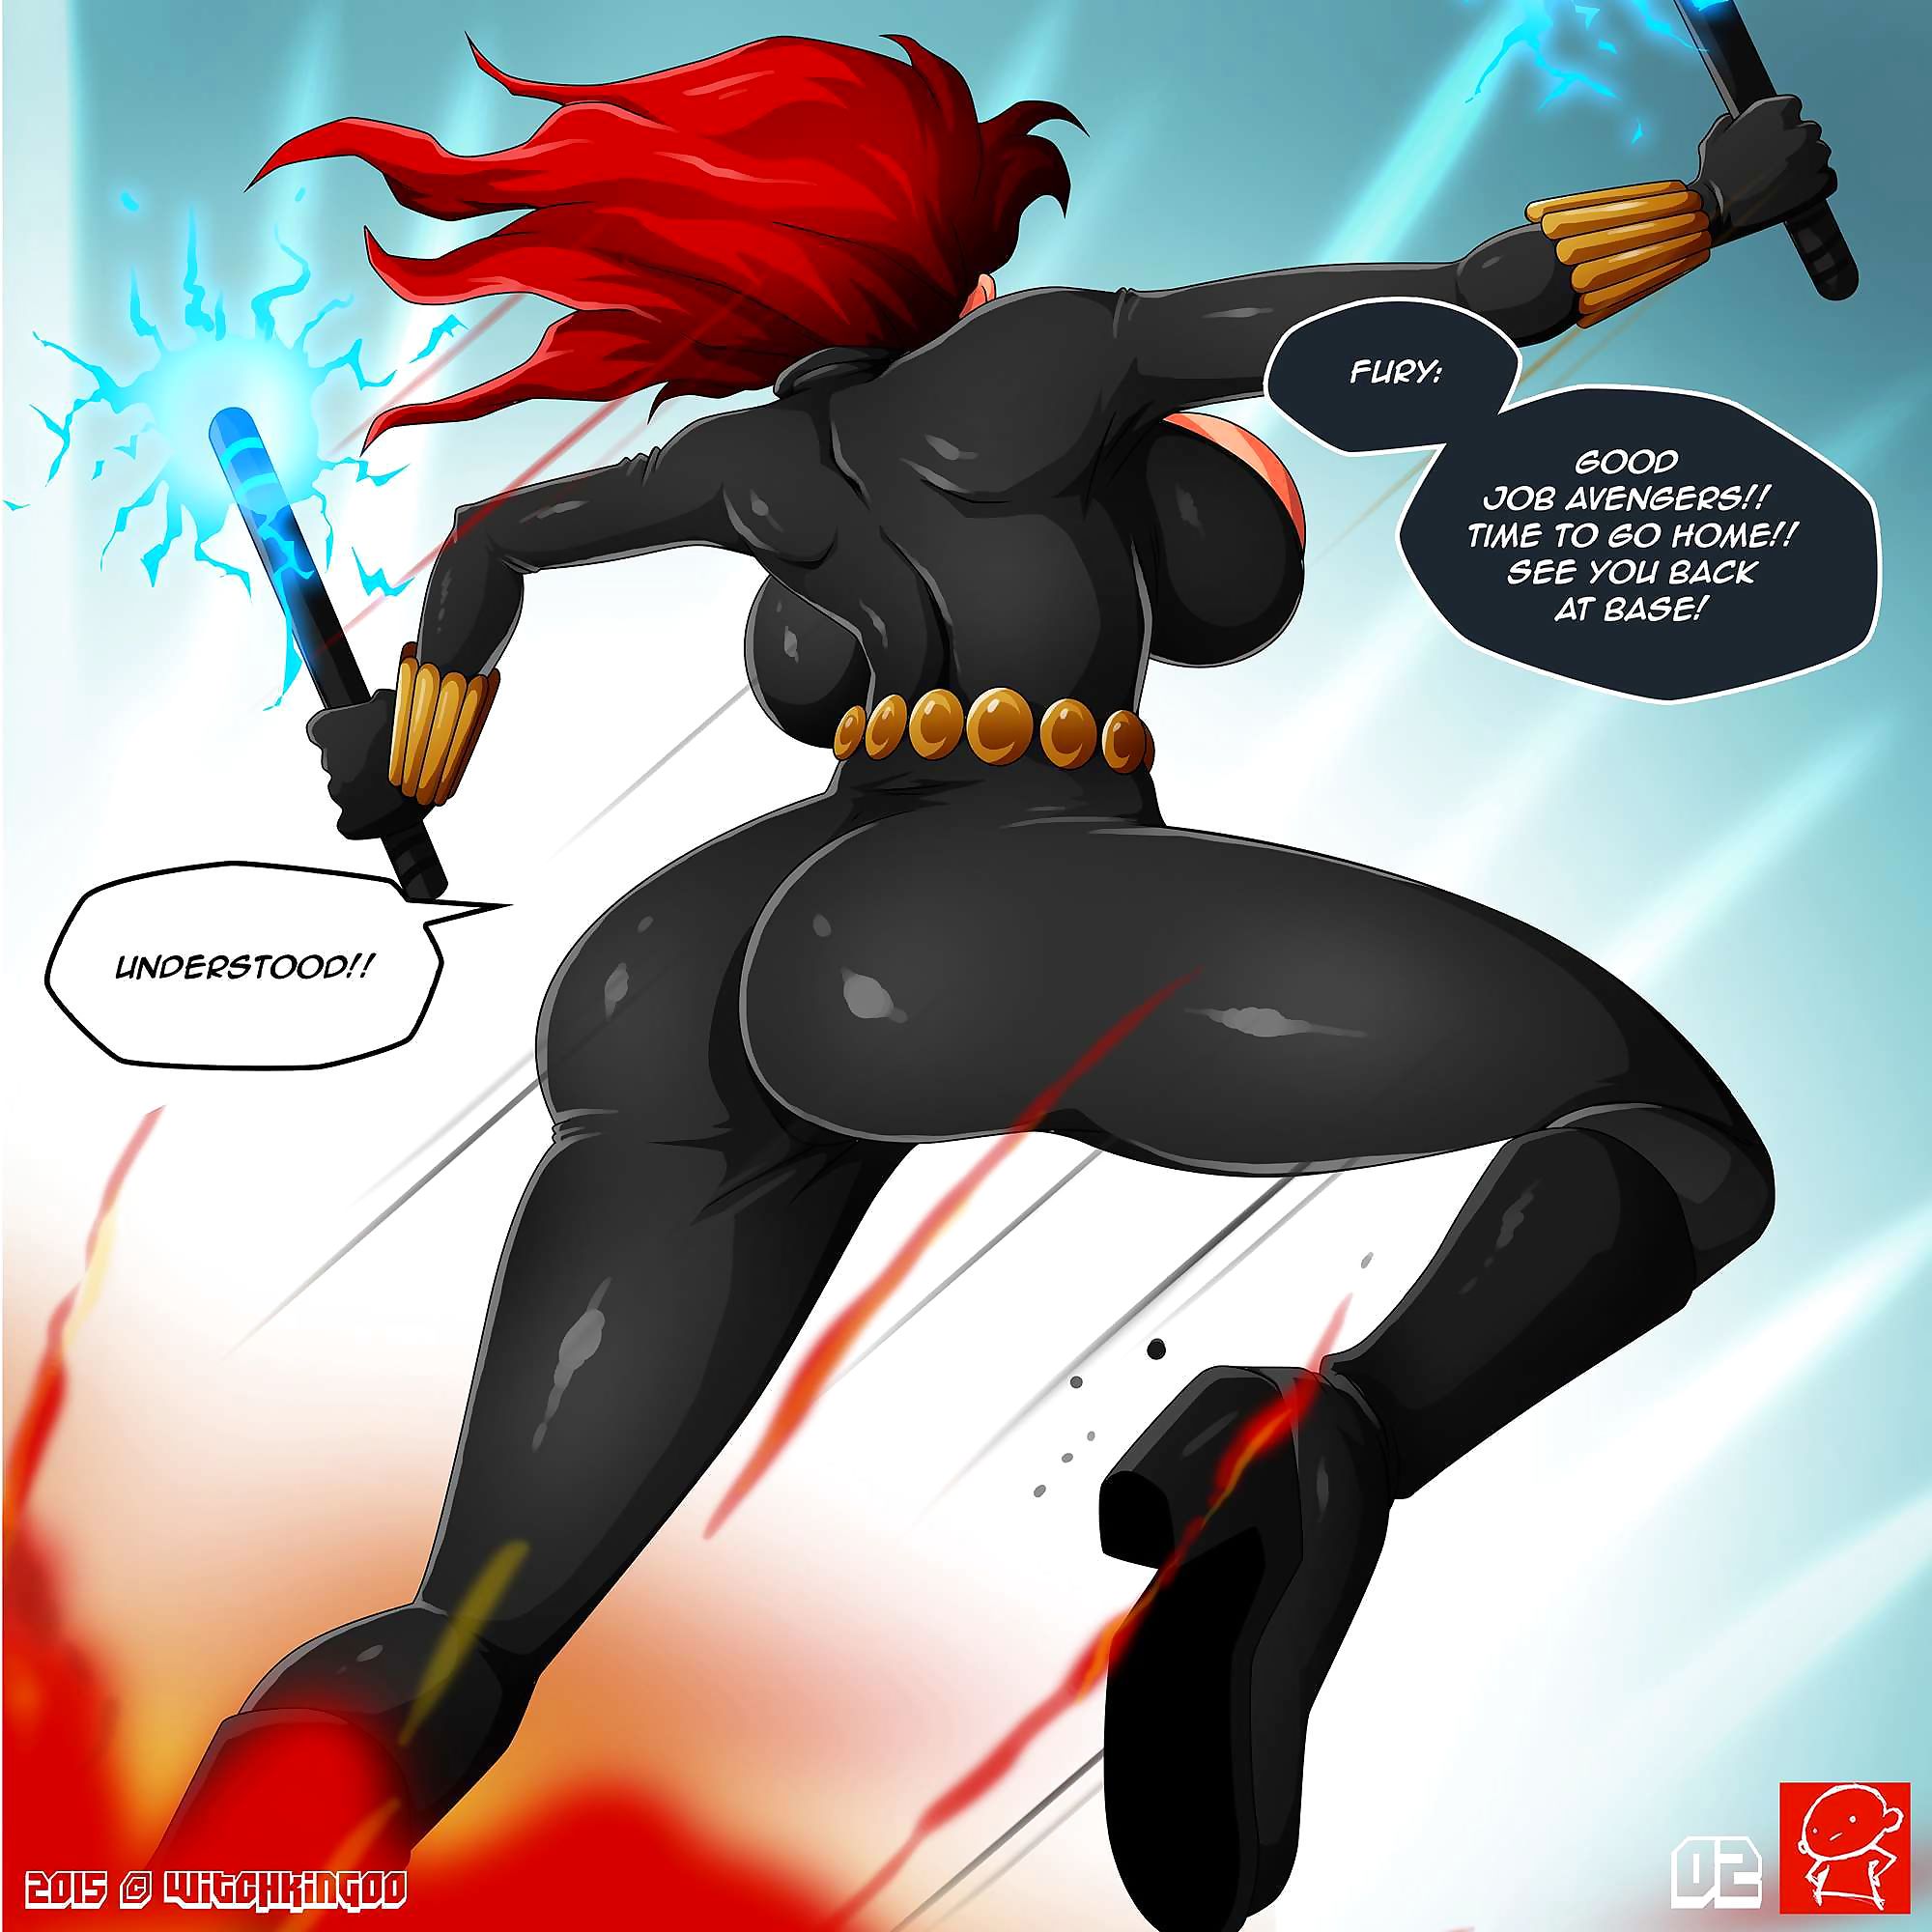 Black Widow- Witchking00 page 1